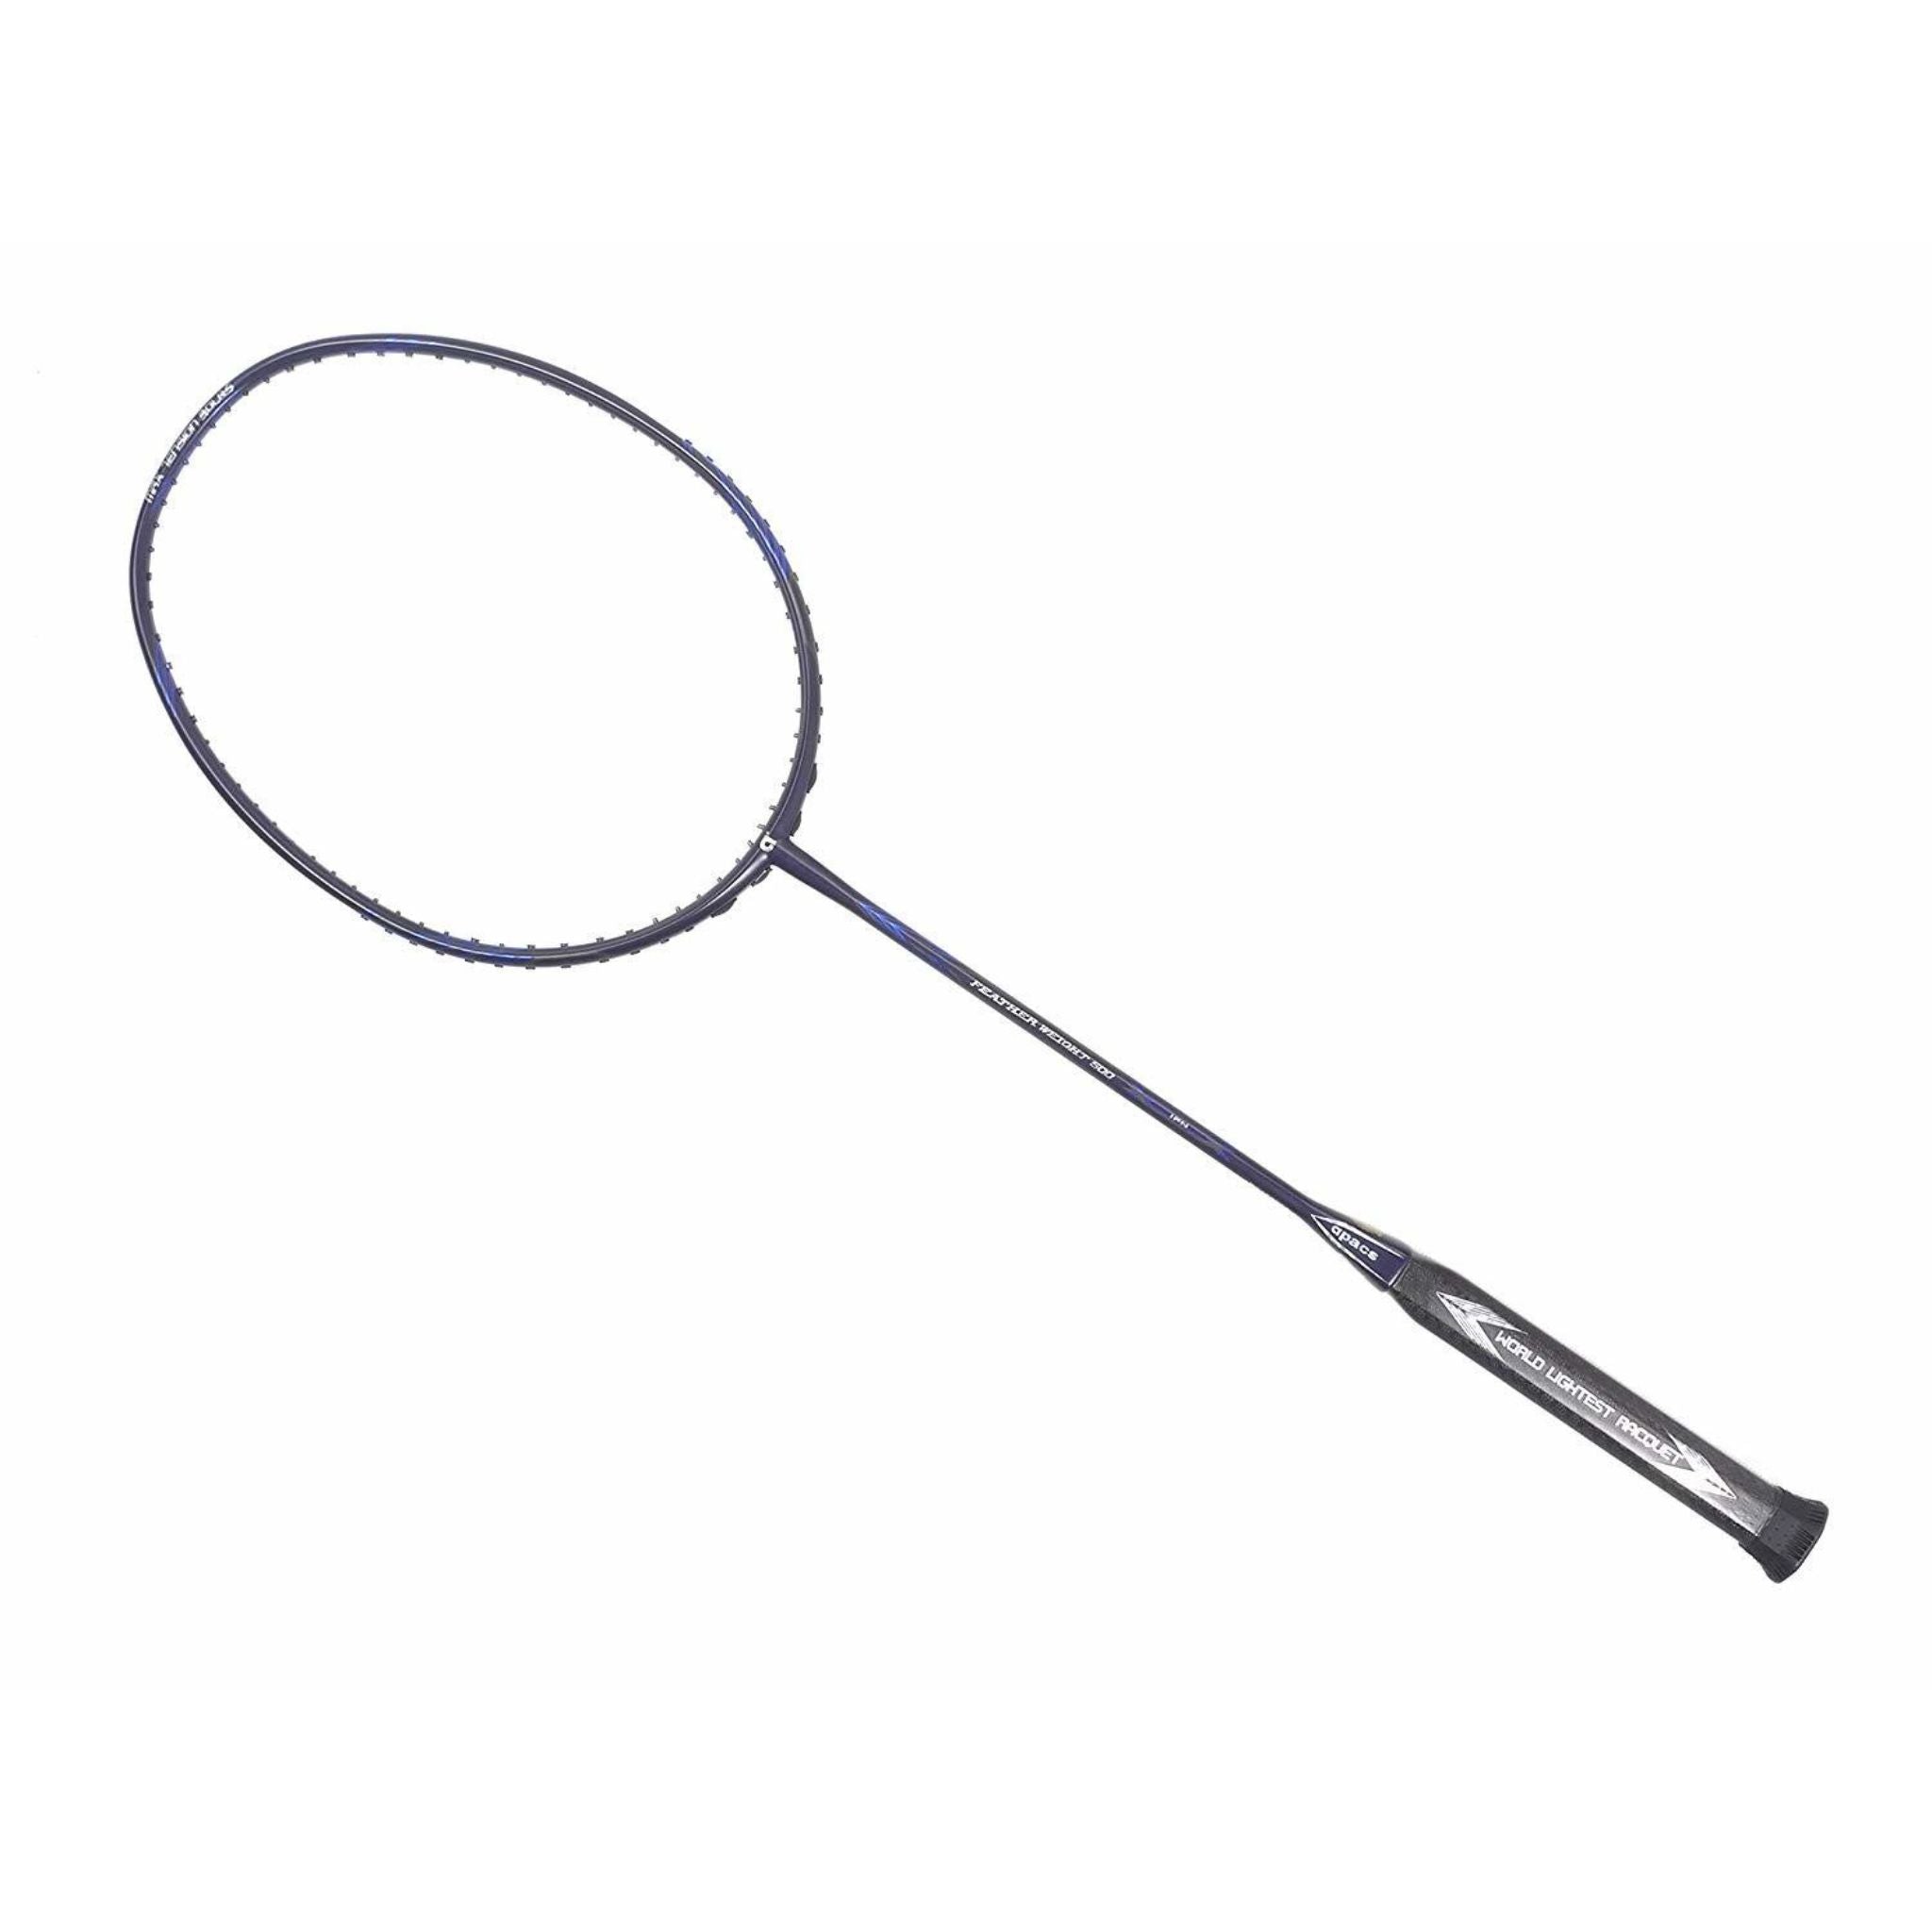 APACS Feather Weight 500 Badminton Racket